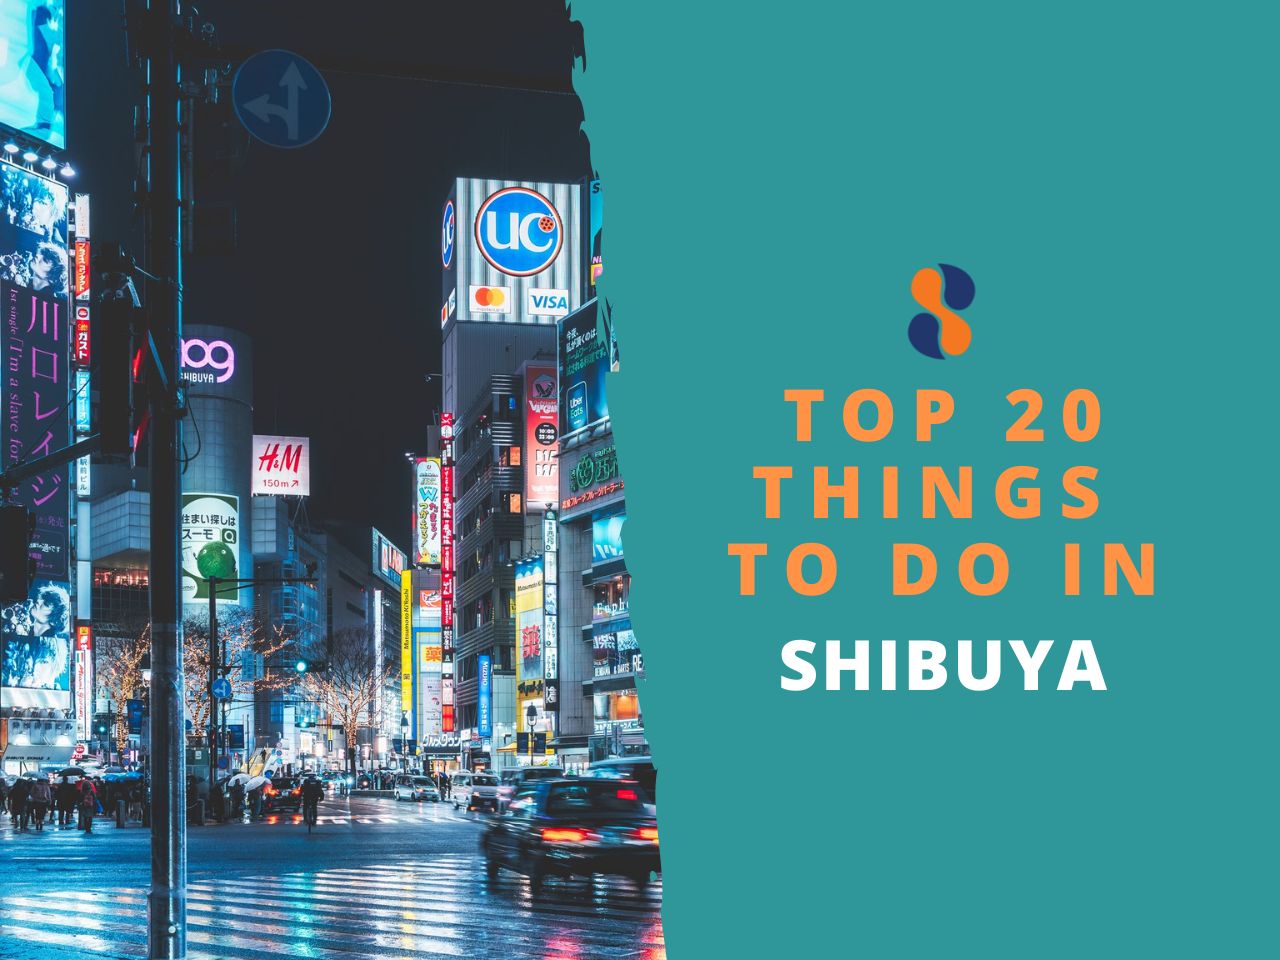 Top 20 Things to Do in Shibuya